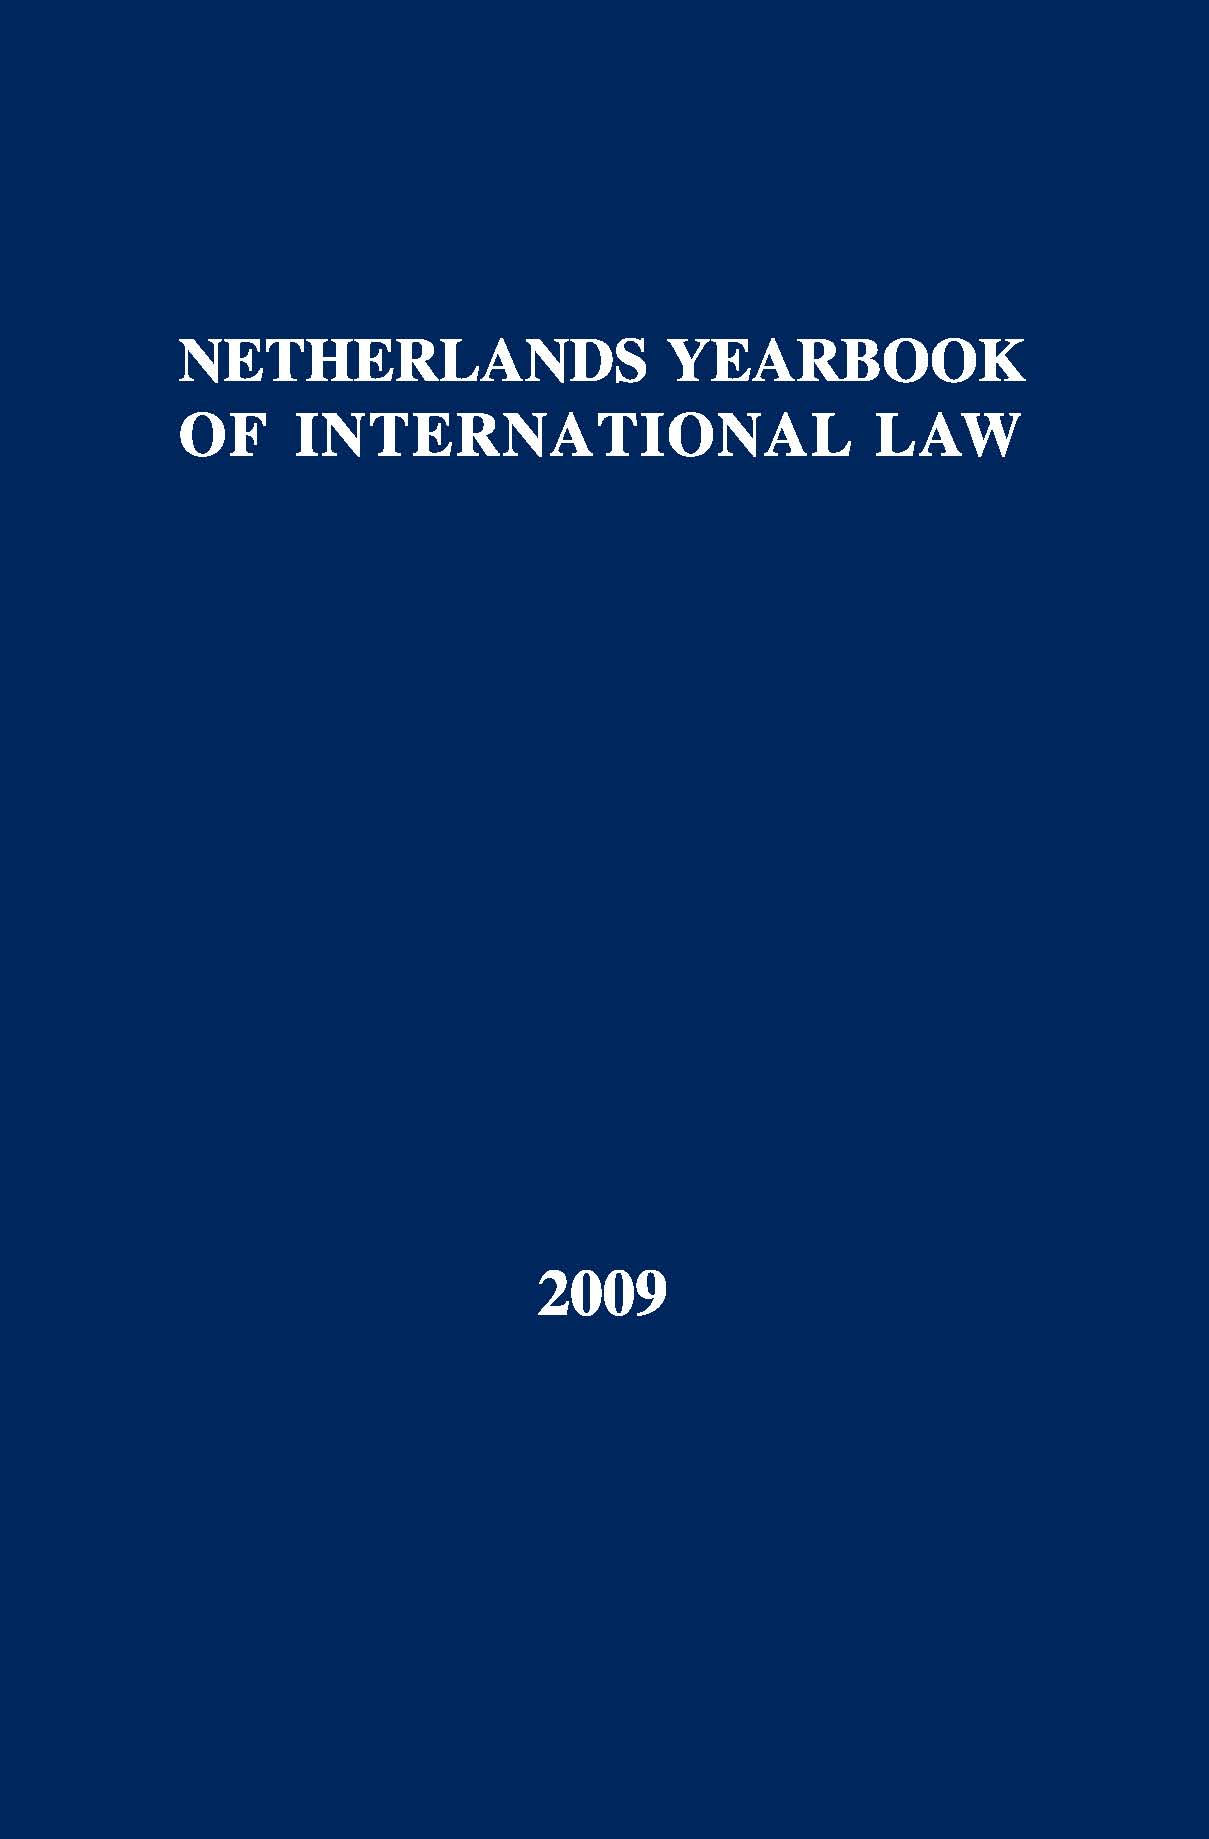 Netherlands Yearbook of International Law - Volume 40, 2009